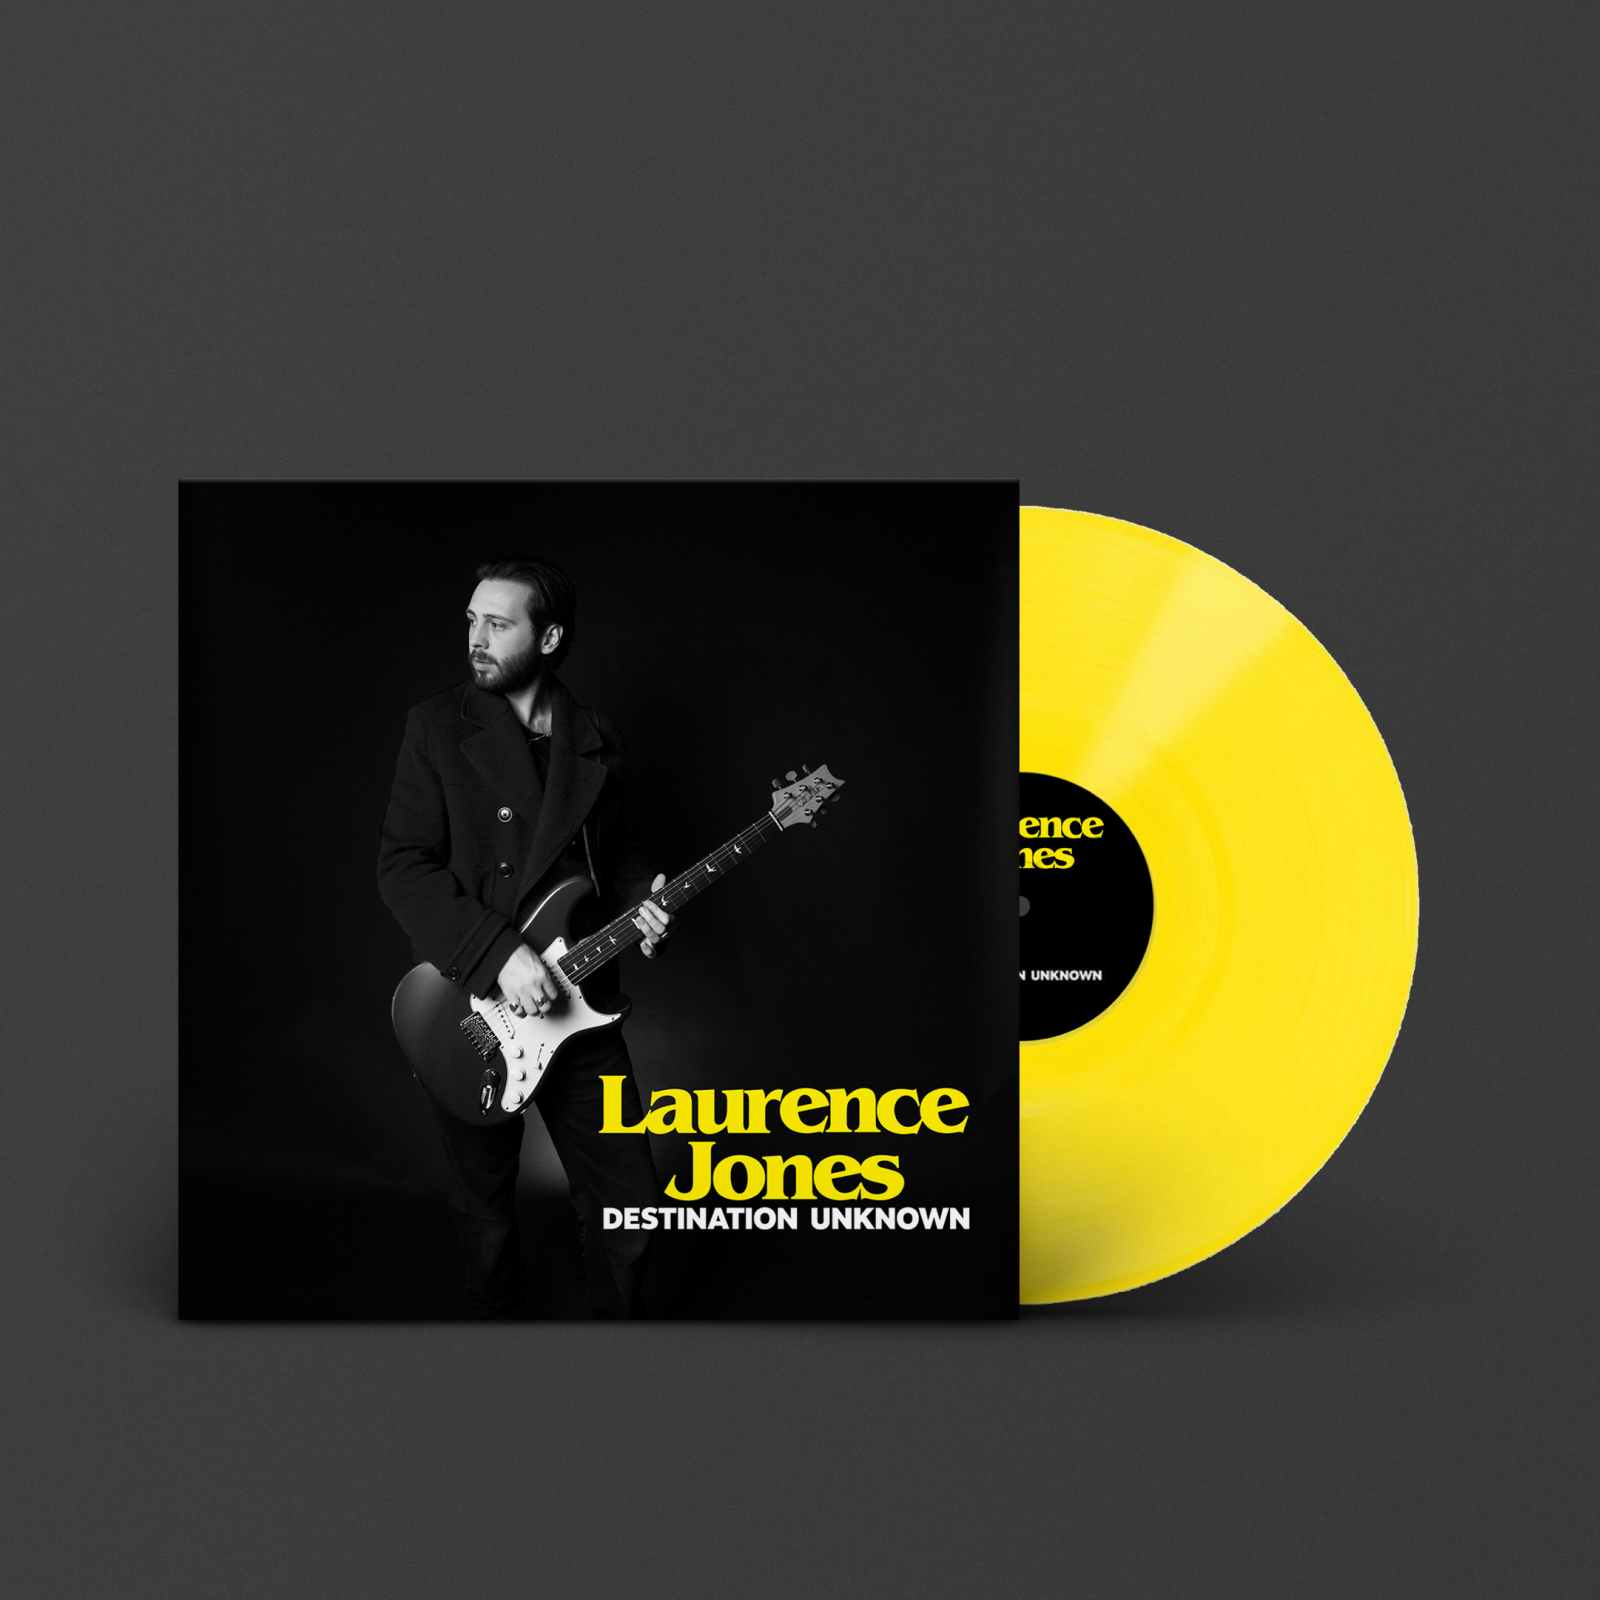 Laurence Jones joue sur un vinyle jaune DESTINATION UNKNOWN, LAURENCE JONES de Marshall.